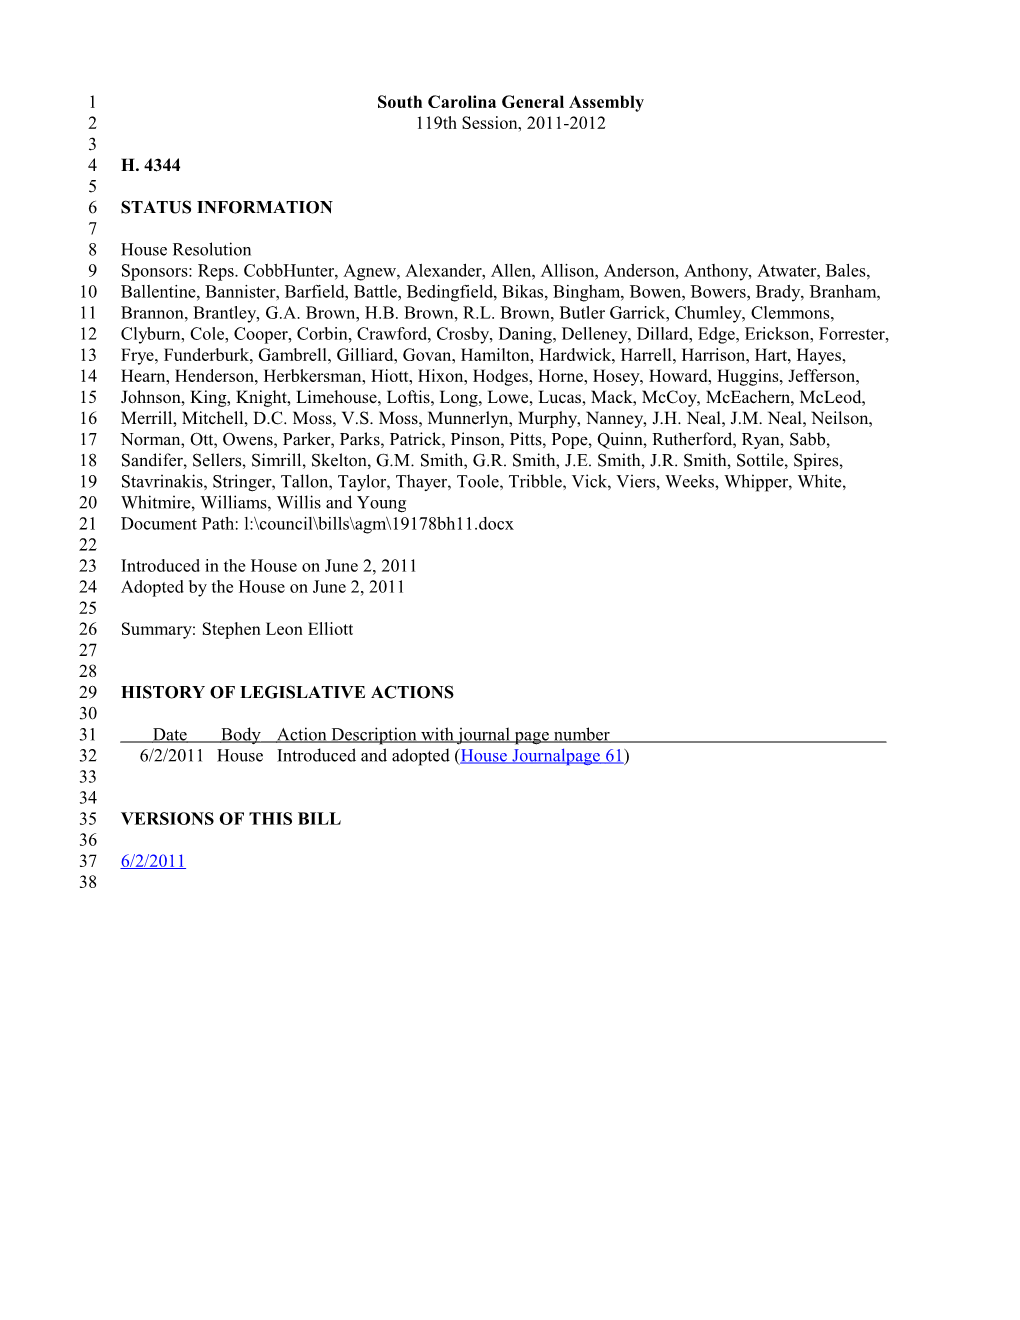 2011-2012 Bill 4344: Stephen Leon Elliott - South Carolina Legislature Online